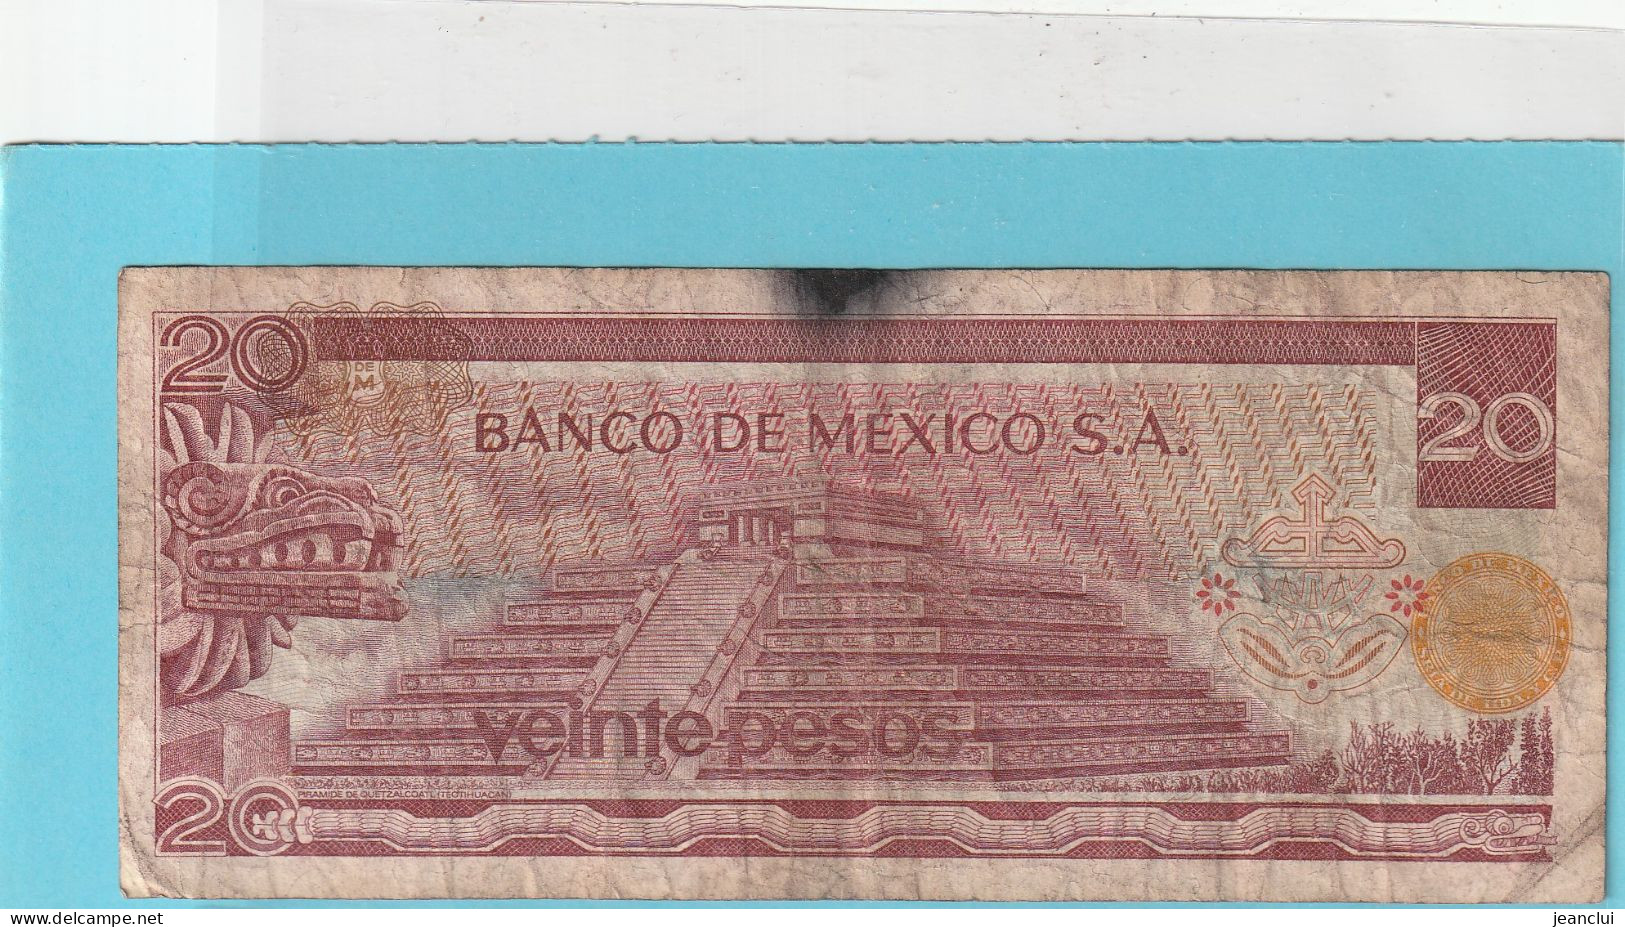 EL BANCO DE MEXICO S.A.   .  20 PESOS  .  18-7-1973  .  N°  L 8388428 .  2 SCANNES  .  BILLET TRES USITE - Mexiko